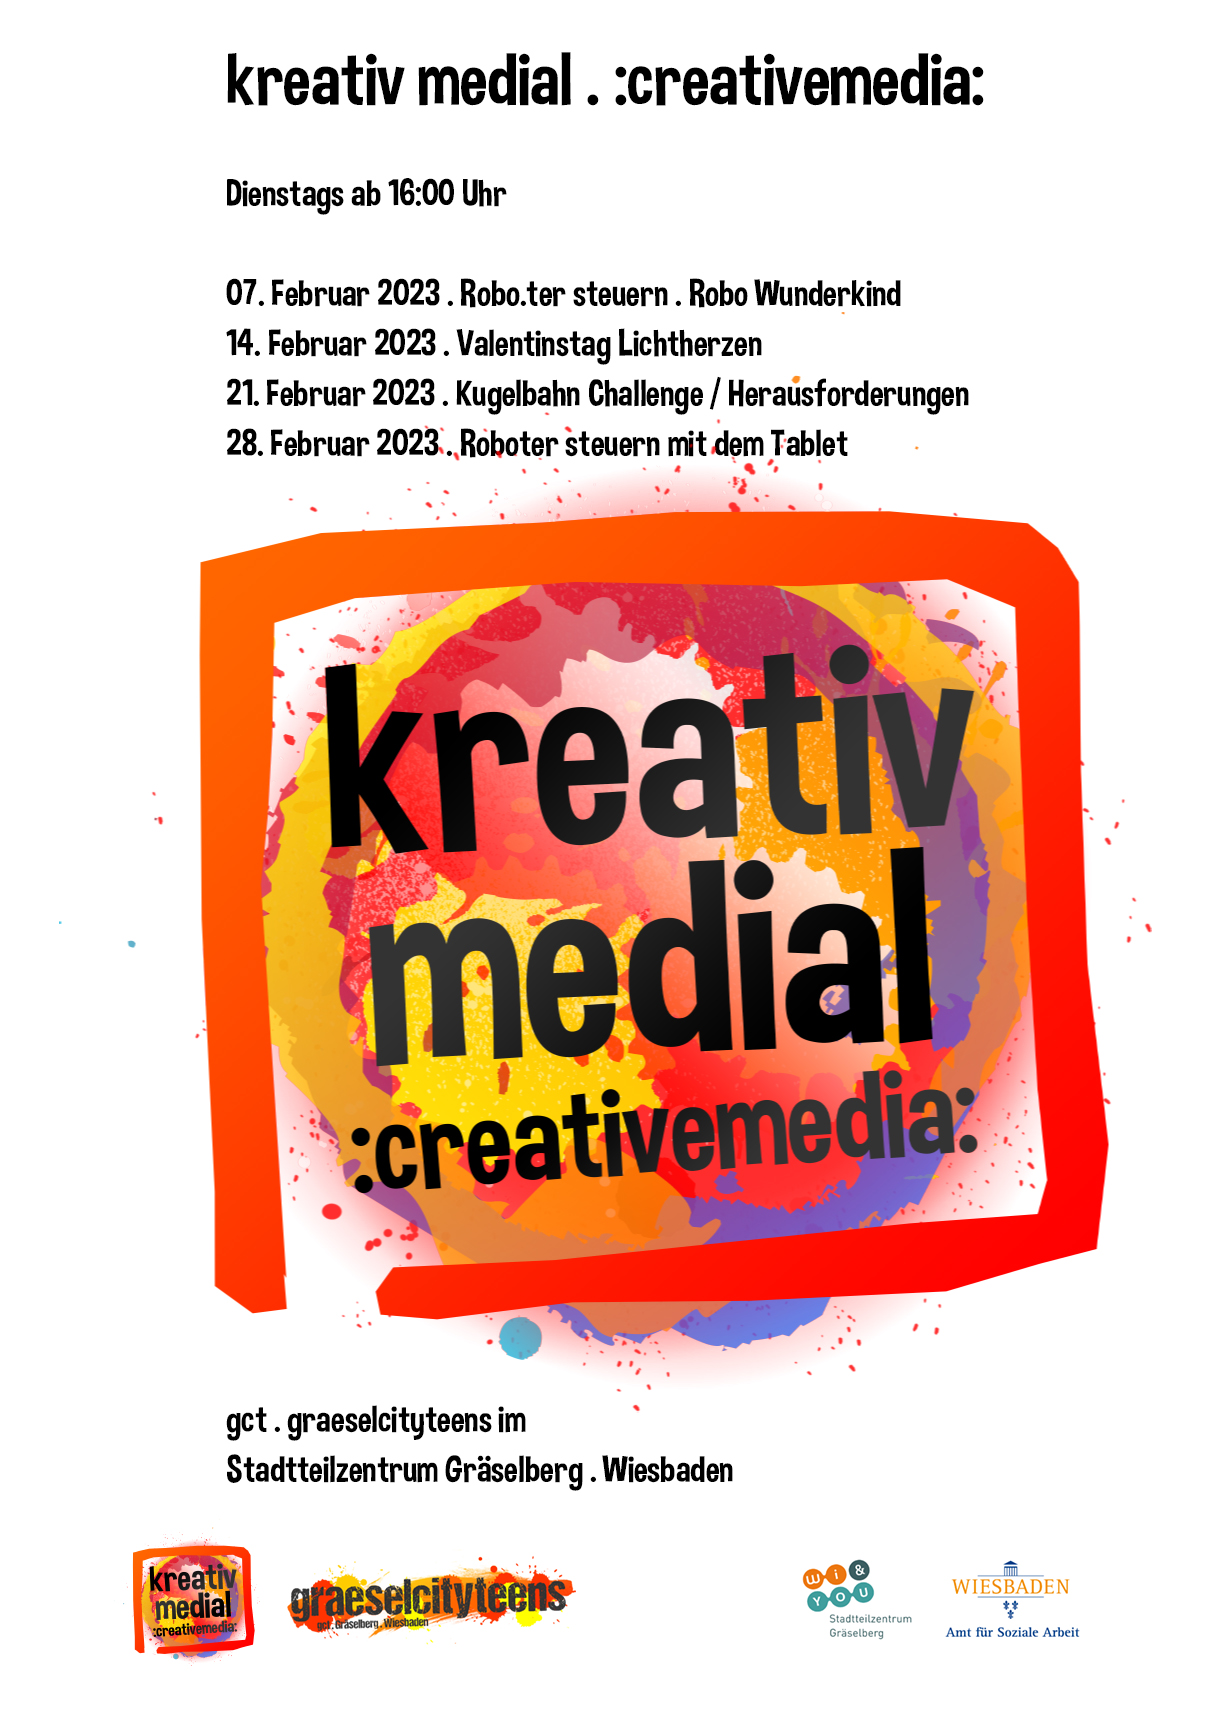 kreativ medial . :creativemedia: . Dienstags ab 16:00 Uhr . 6. Februar 2023 . gct . graeselcityteens ...auf dem GrÃ¤selberg . Stadtteilzentrum GrÃ¤selberg . Wiesbaden